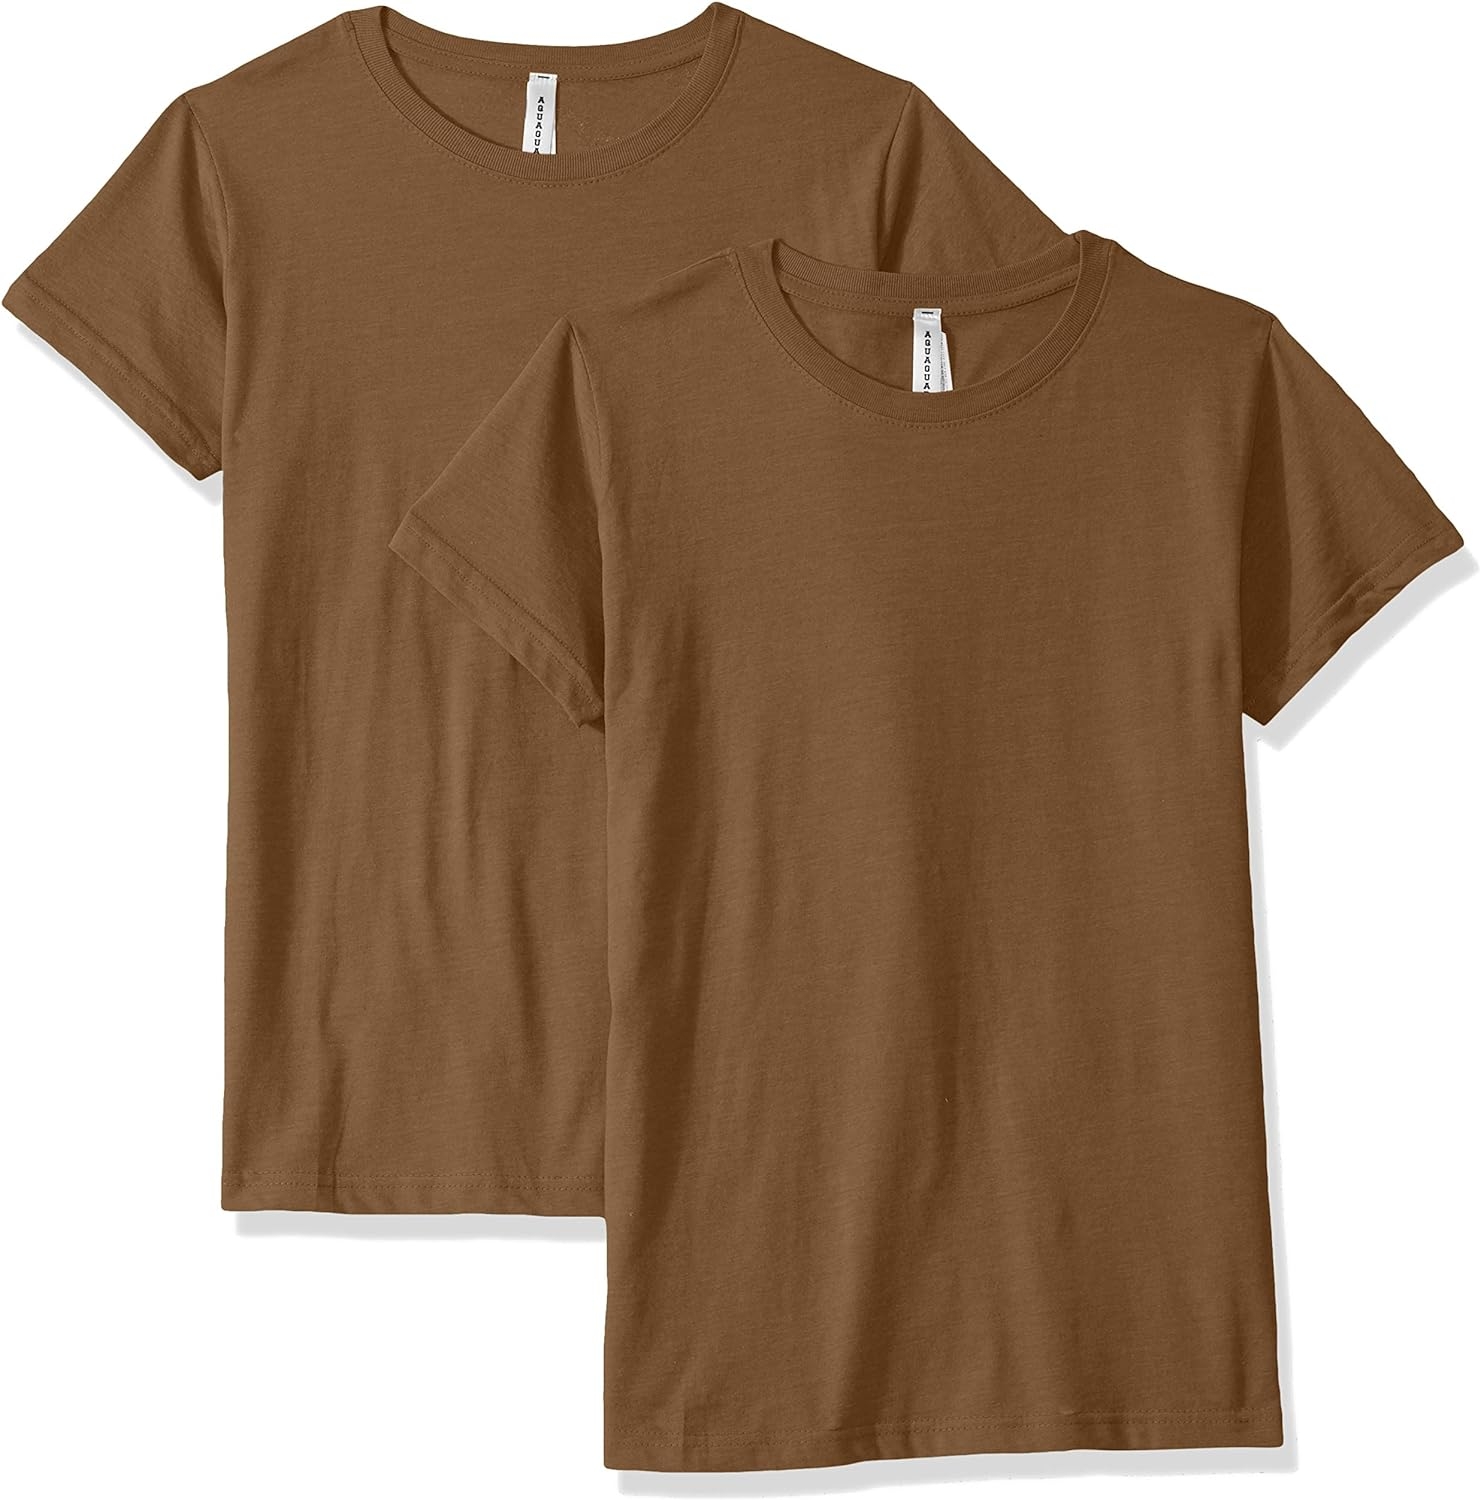 AquaGuard Women's Fine Jersey Longer Length T-Shirt-2 Pack